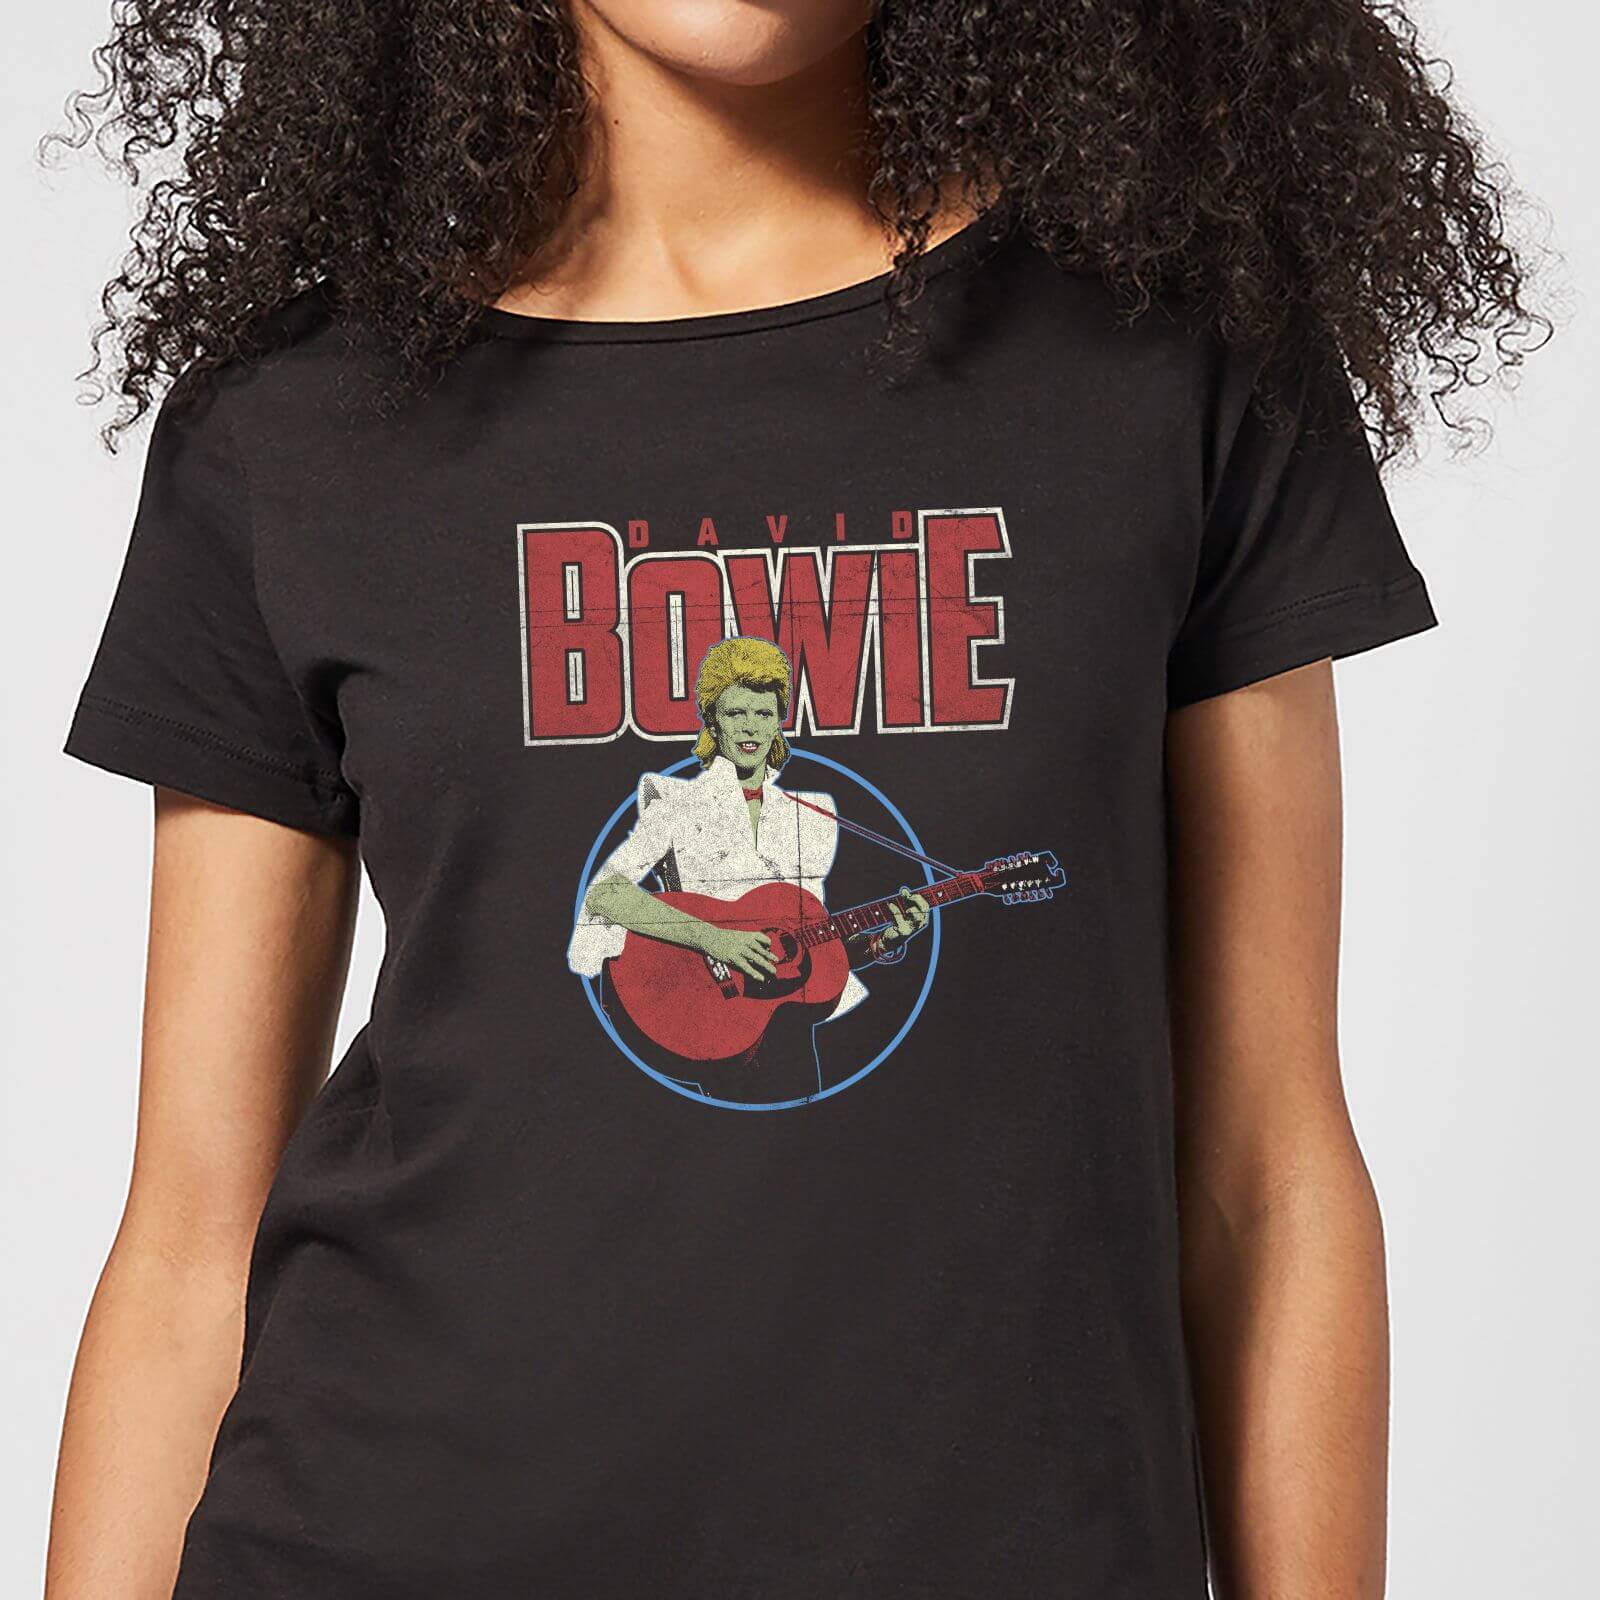 David Bowie Bootleg Women's T-Shirt - Black - M - Black